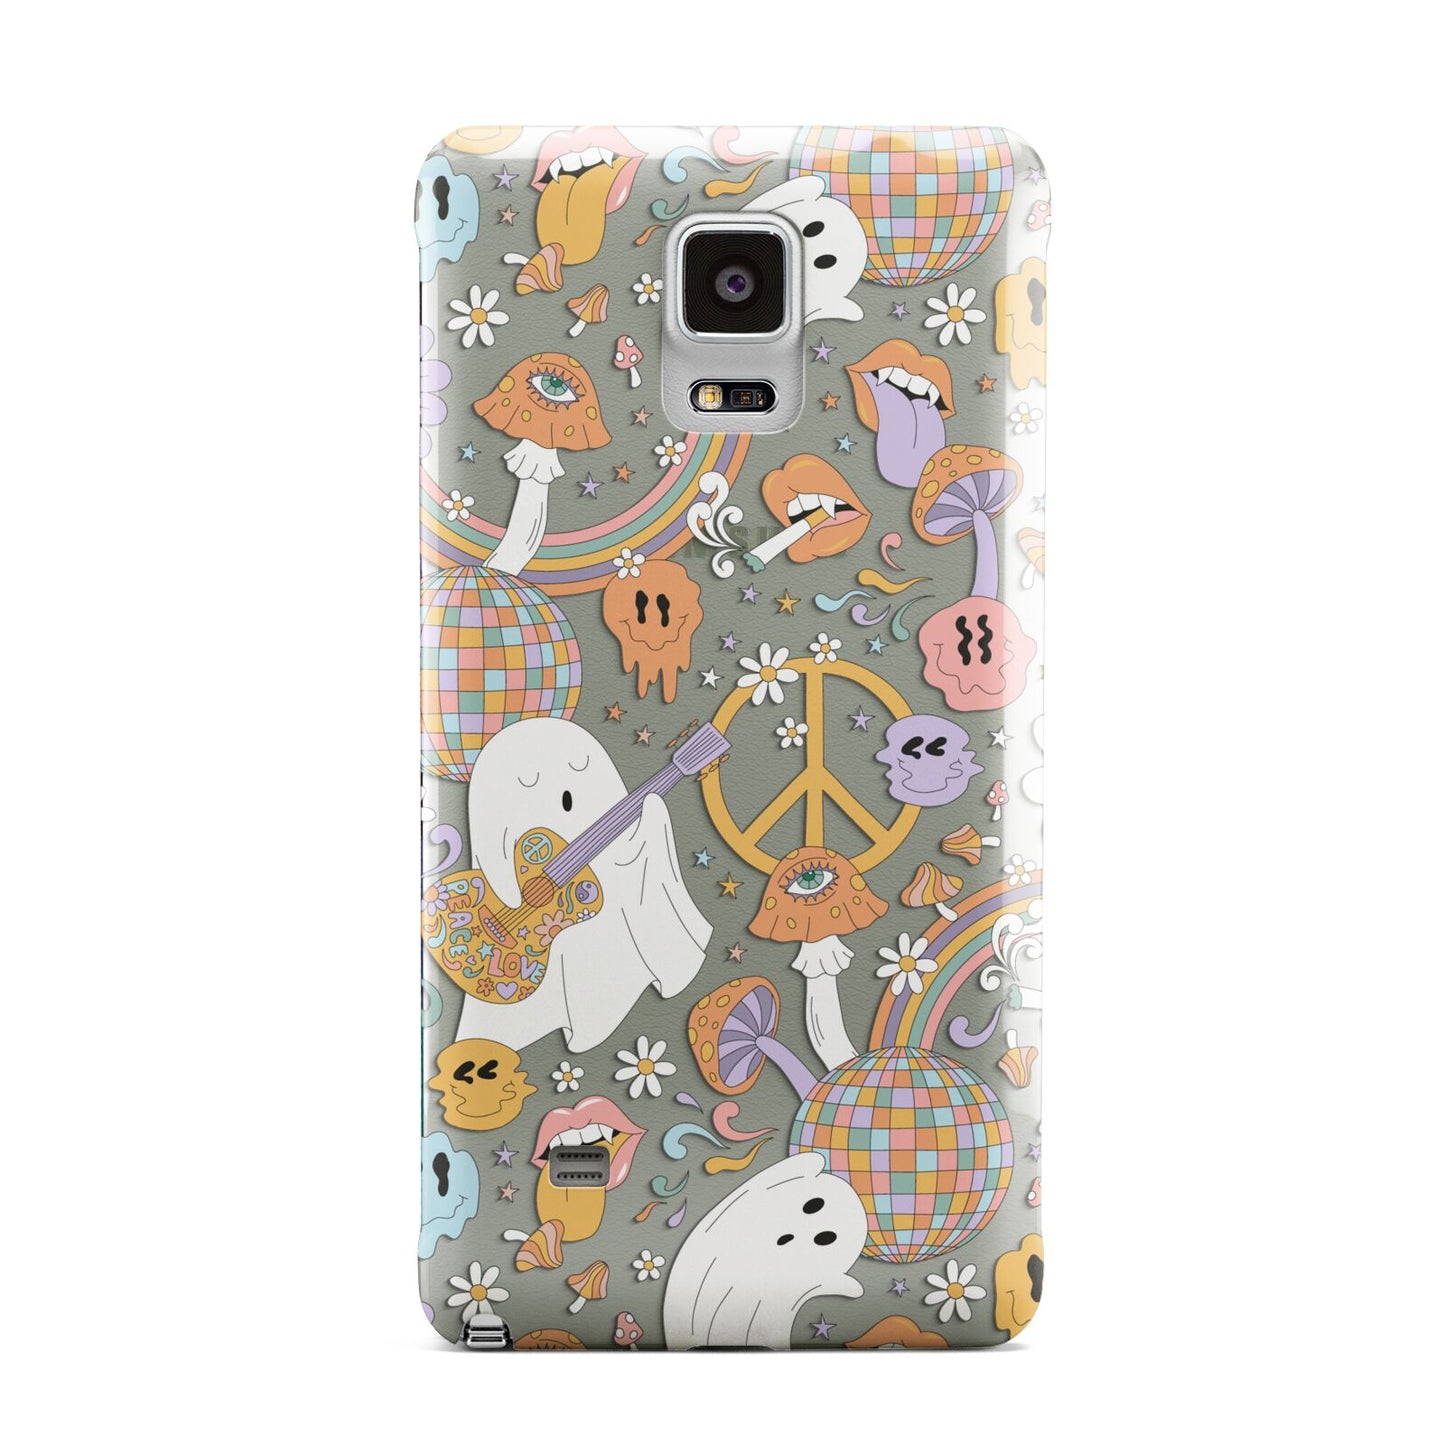 Disco Ghosts Samsung Galaxy Note 4 Case